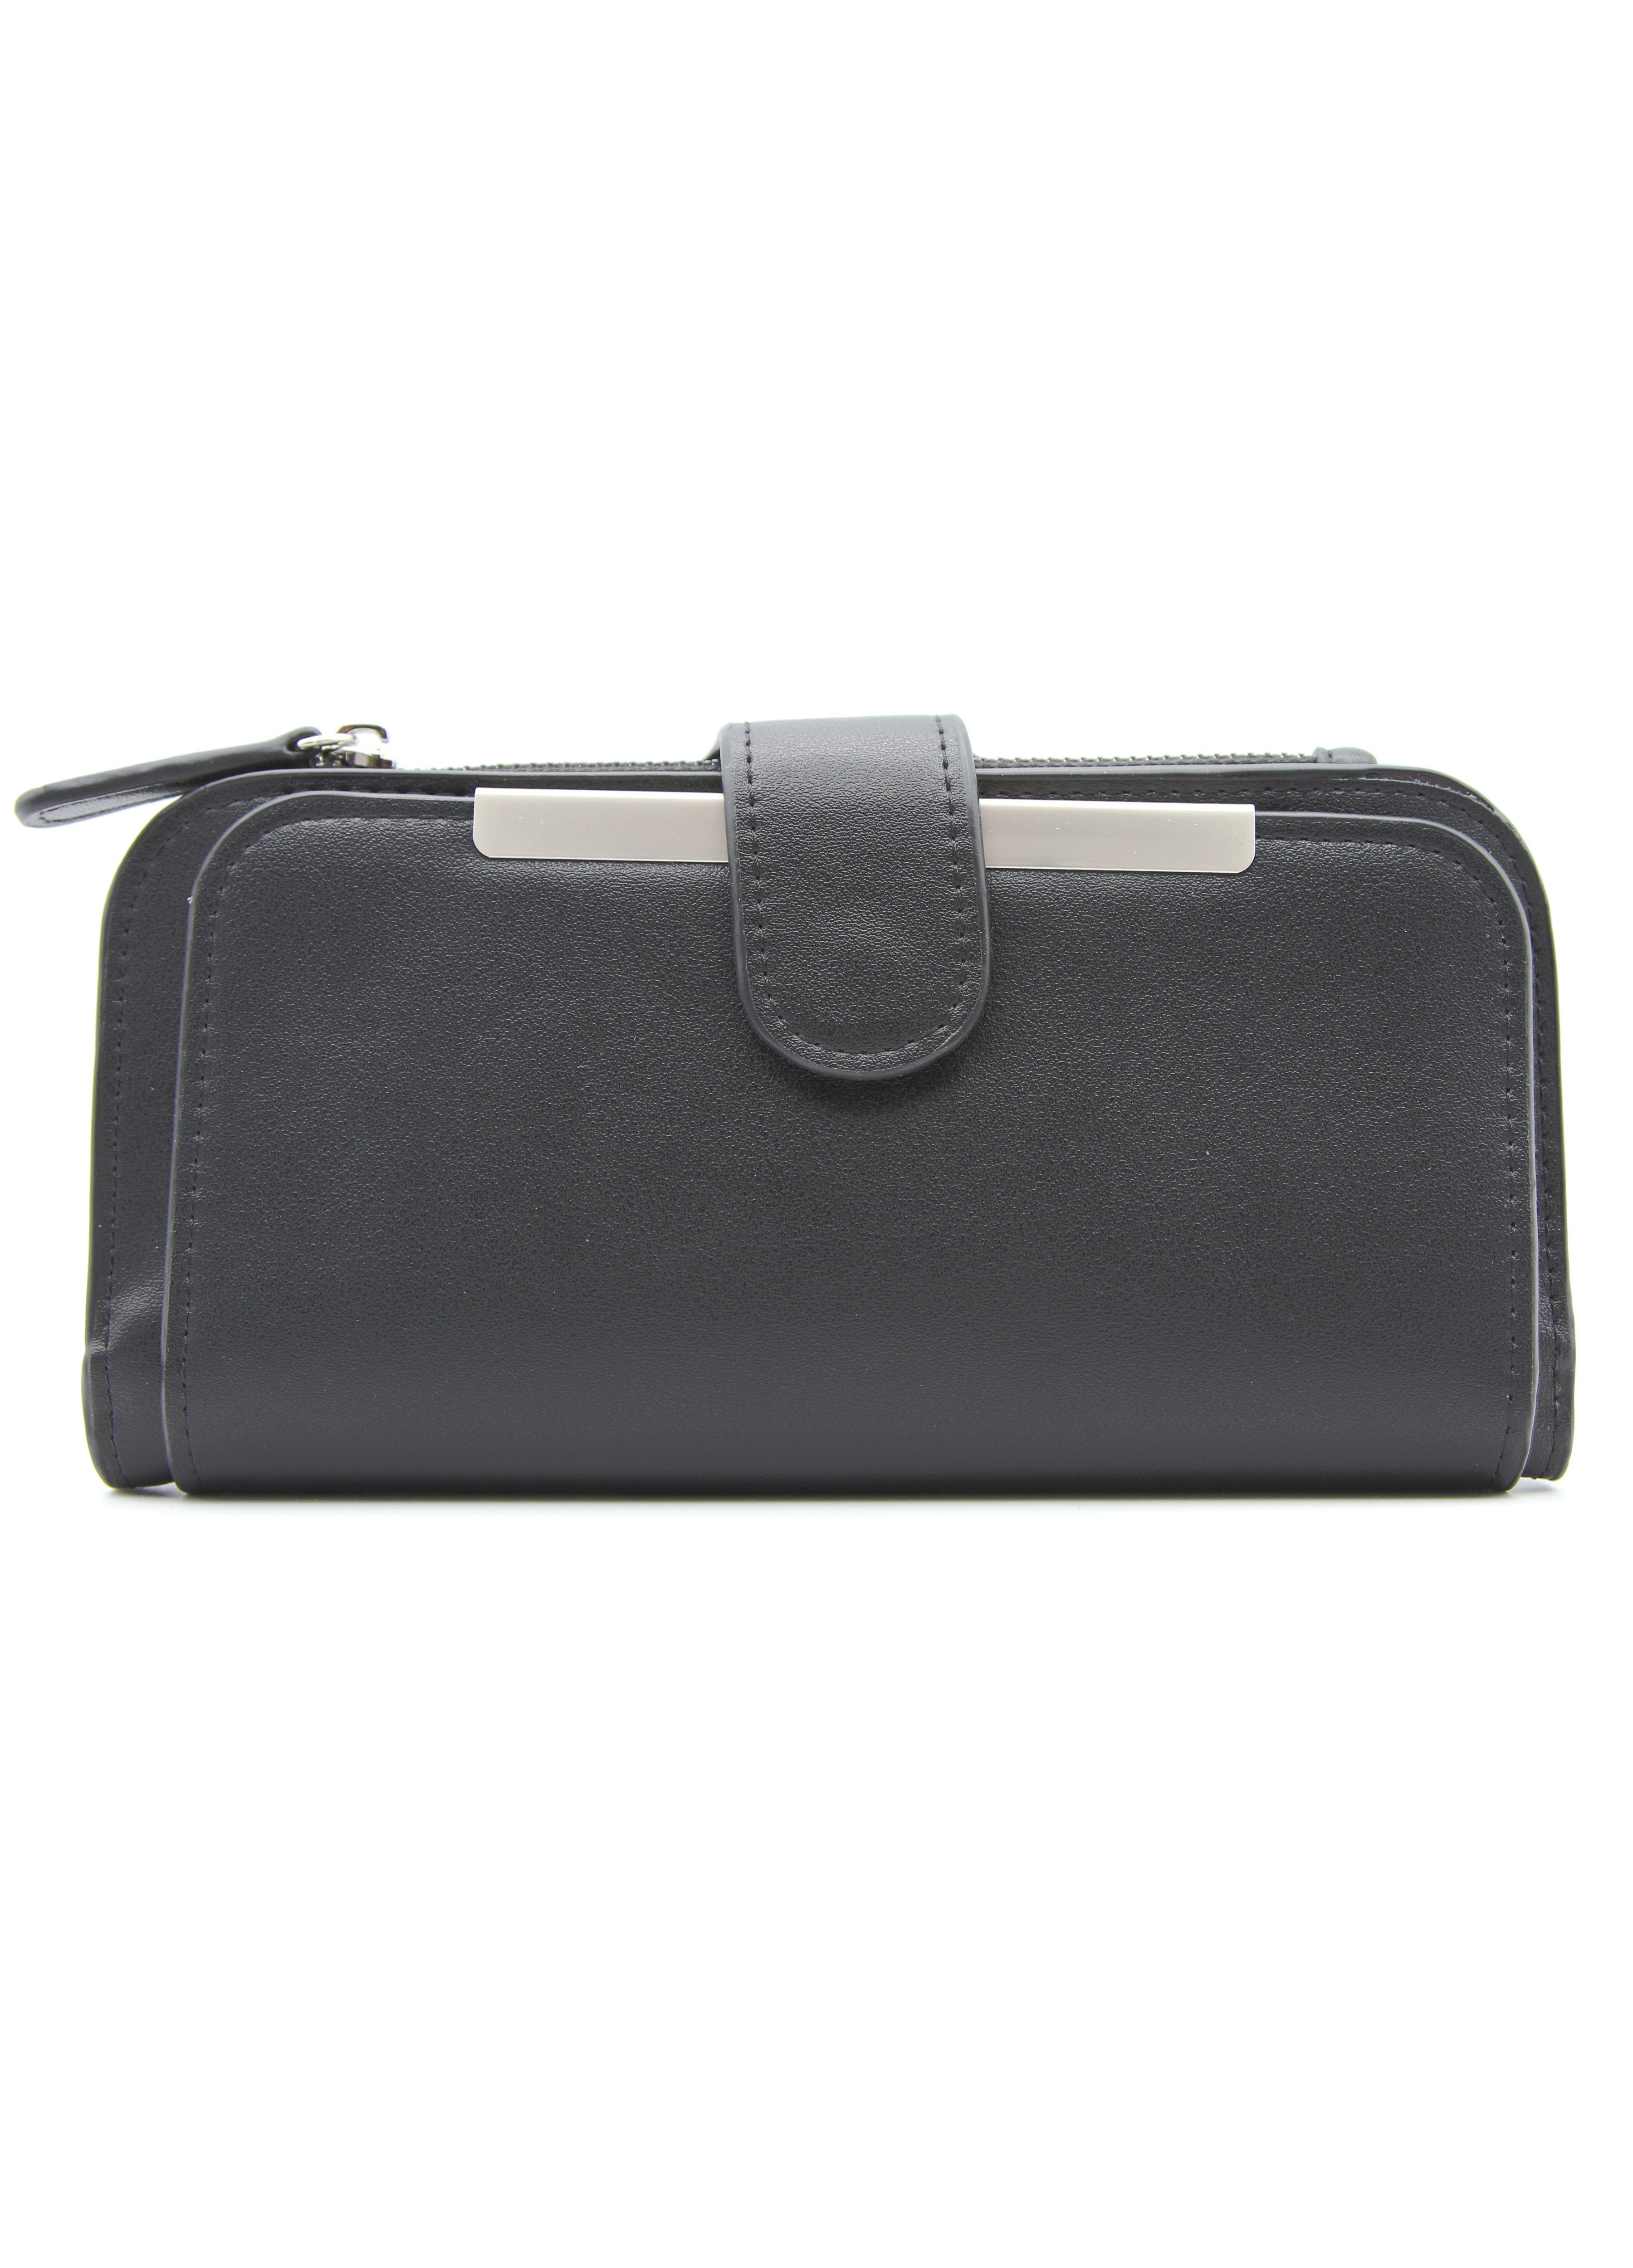 Jasper Conran Designers at Debenhams London Leather Purse Handbag Brown |  eBay